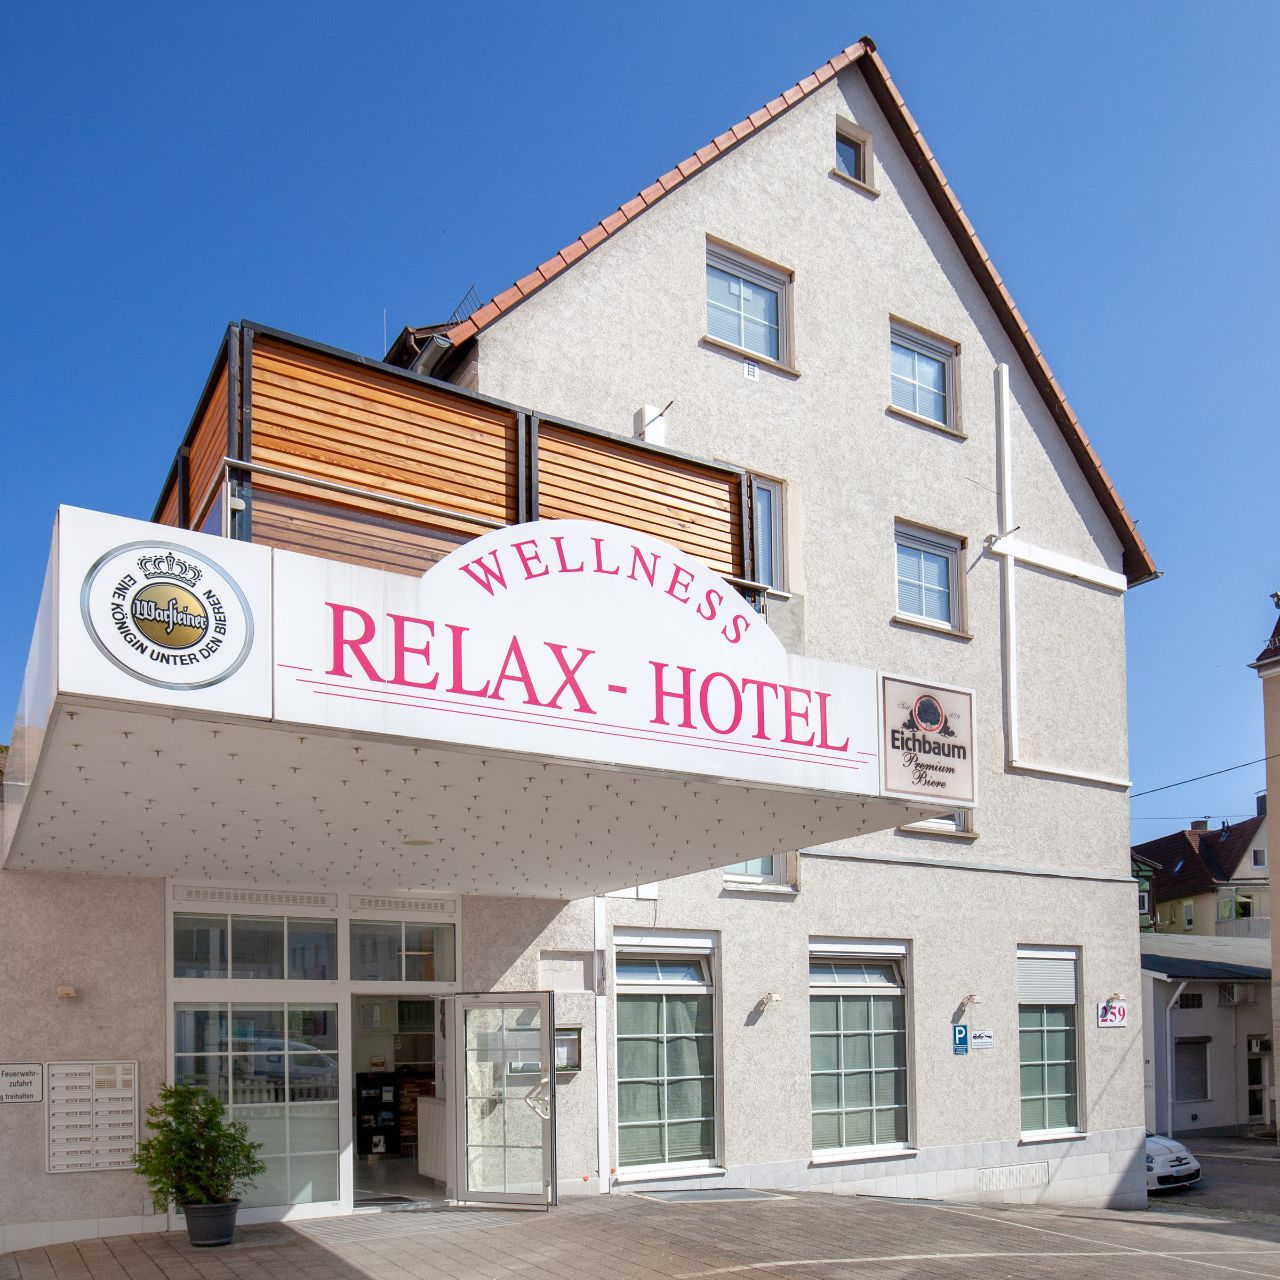 Relax-Hotel Wellnesshotel - Stuttgart image